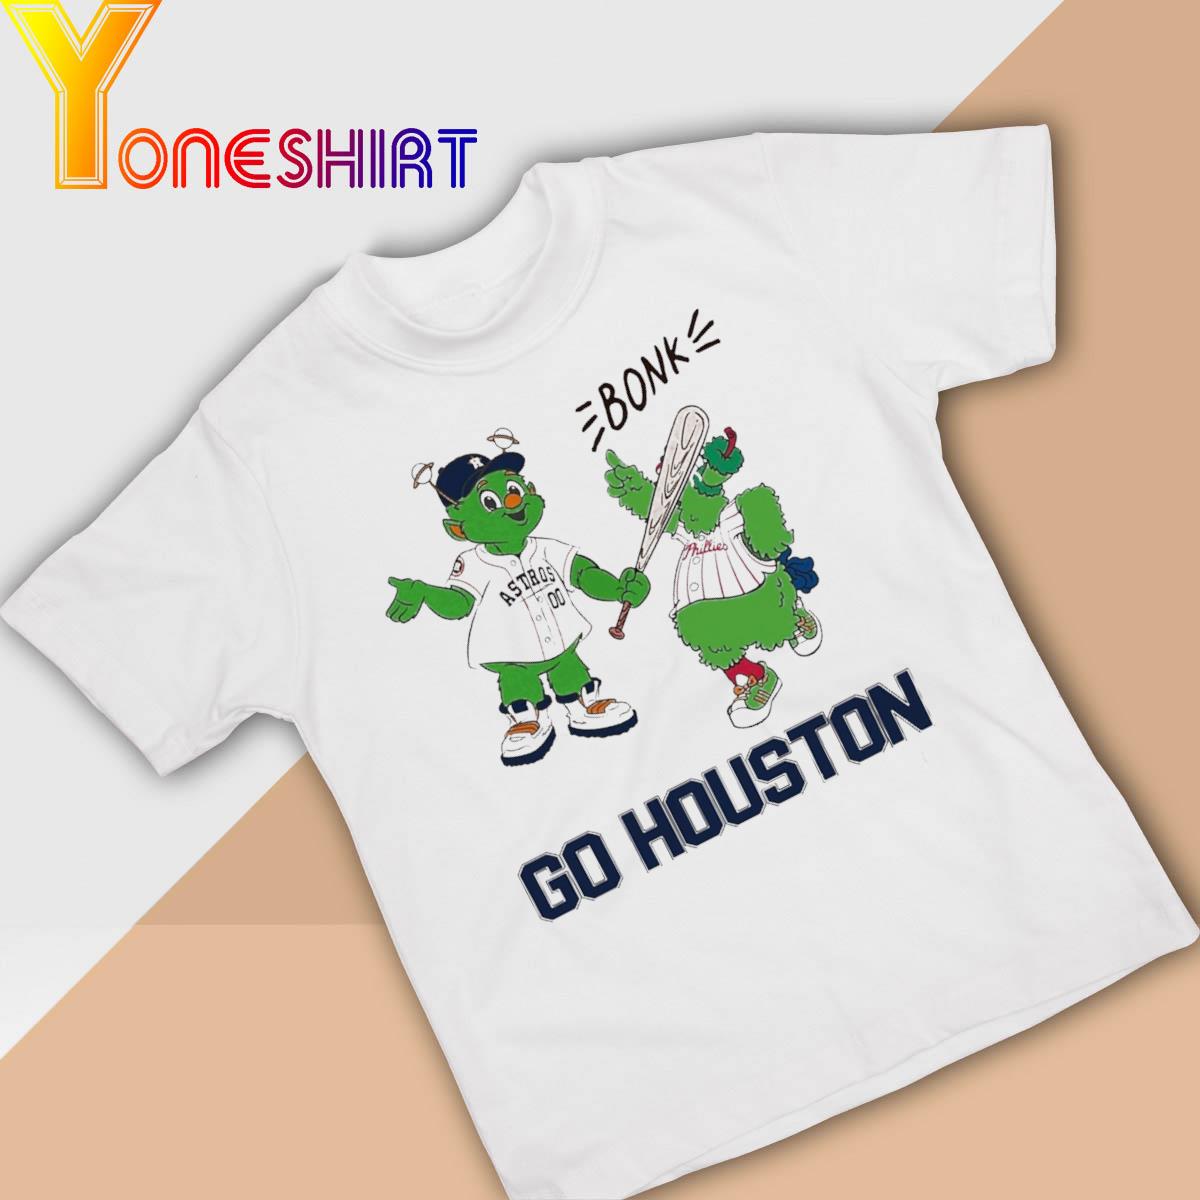 Go Houston Houston Bonk Phillies Shirt